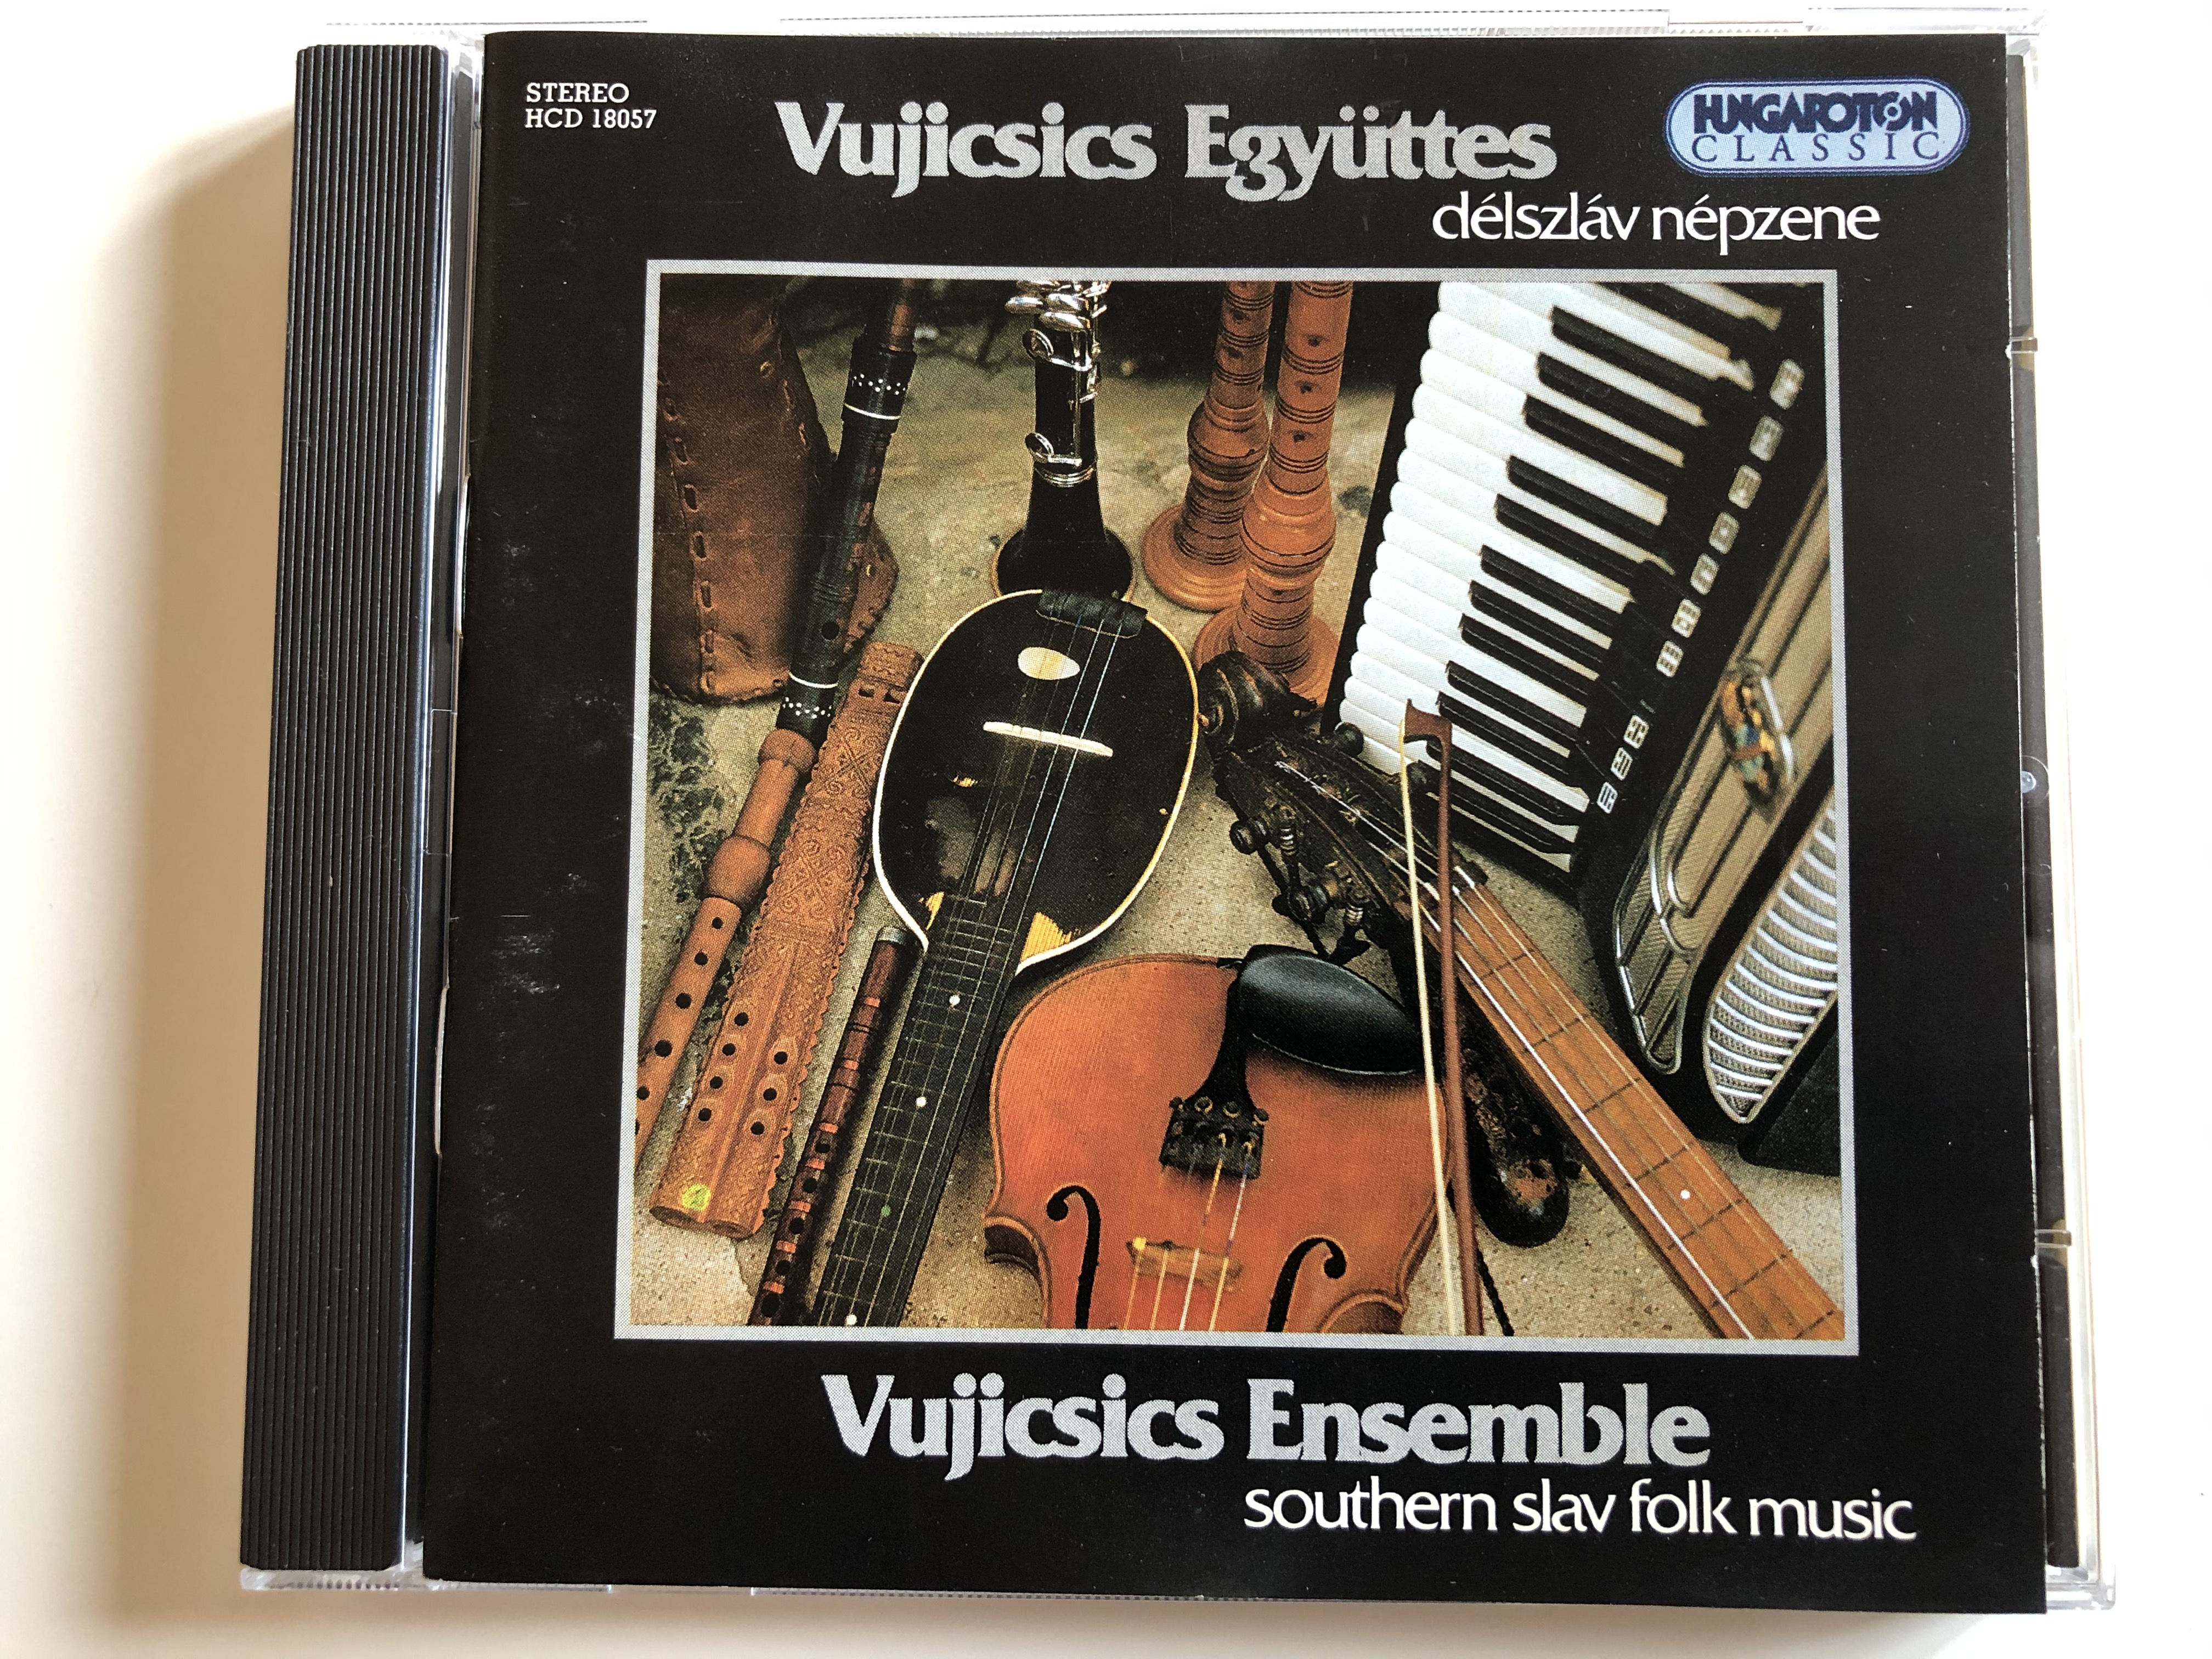 vujicsics-ensemble-southern-slav-folk-music-d-lszl-v-n-pzene-hungaroton-classic-audio-cd-2000-stereo-hcd-18057-1-.jpg